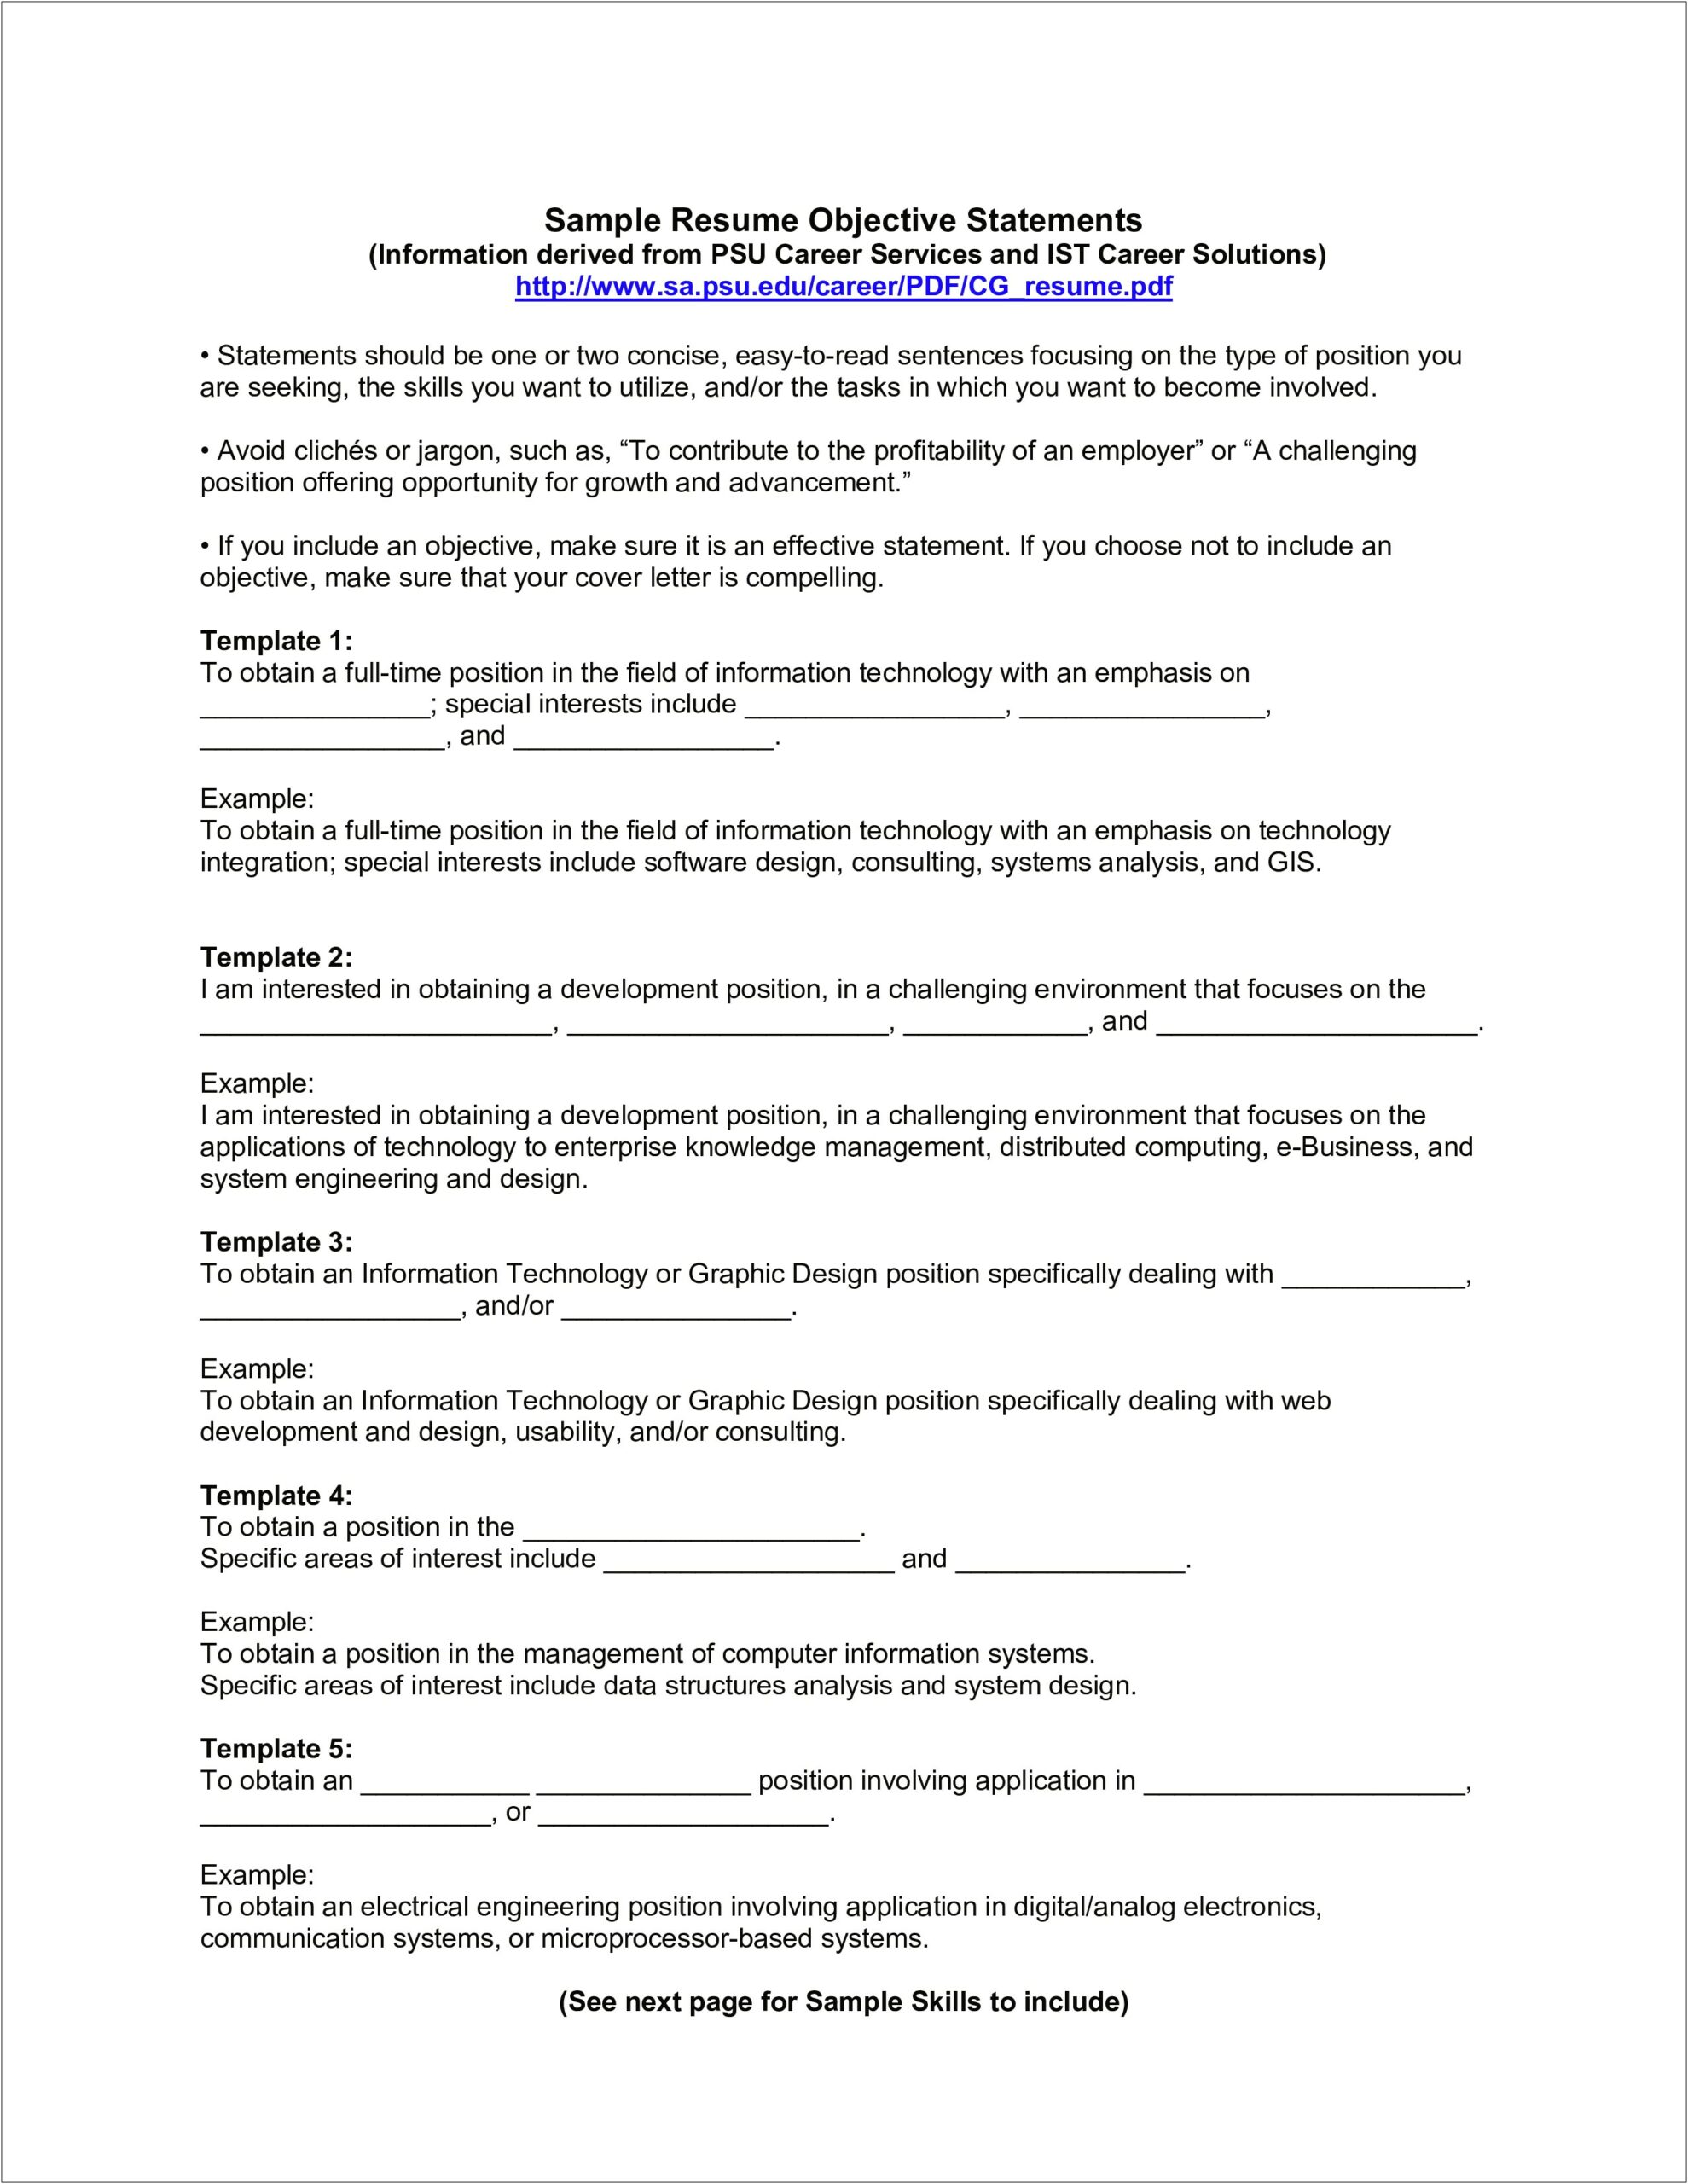 Sample Resume Objective For Management Position